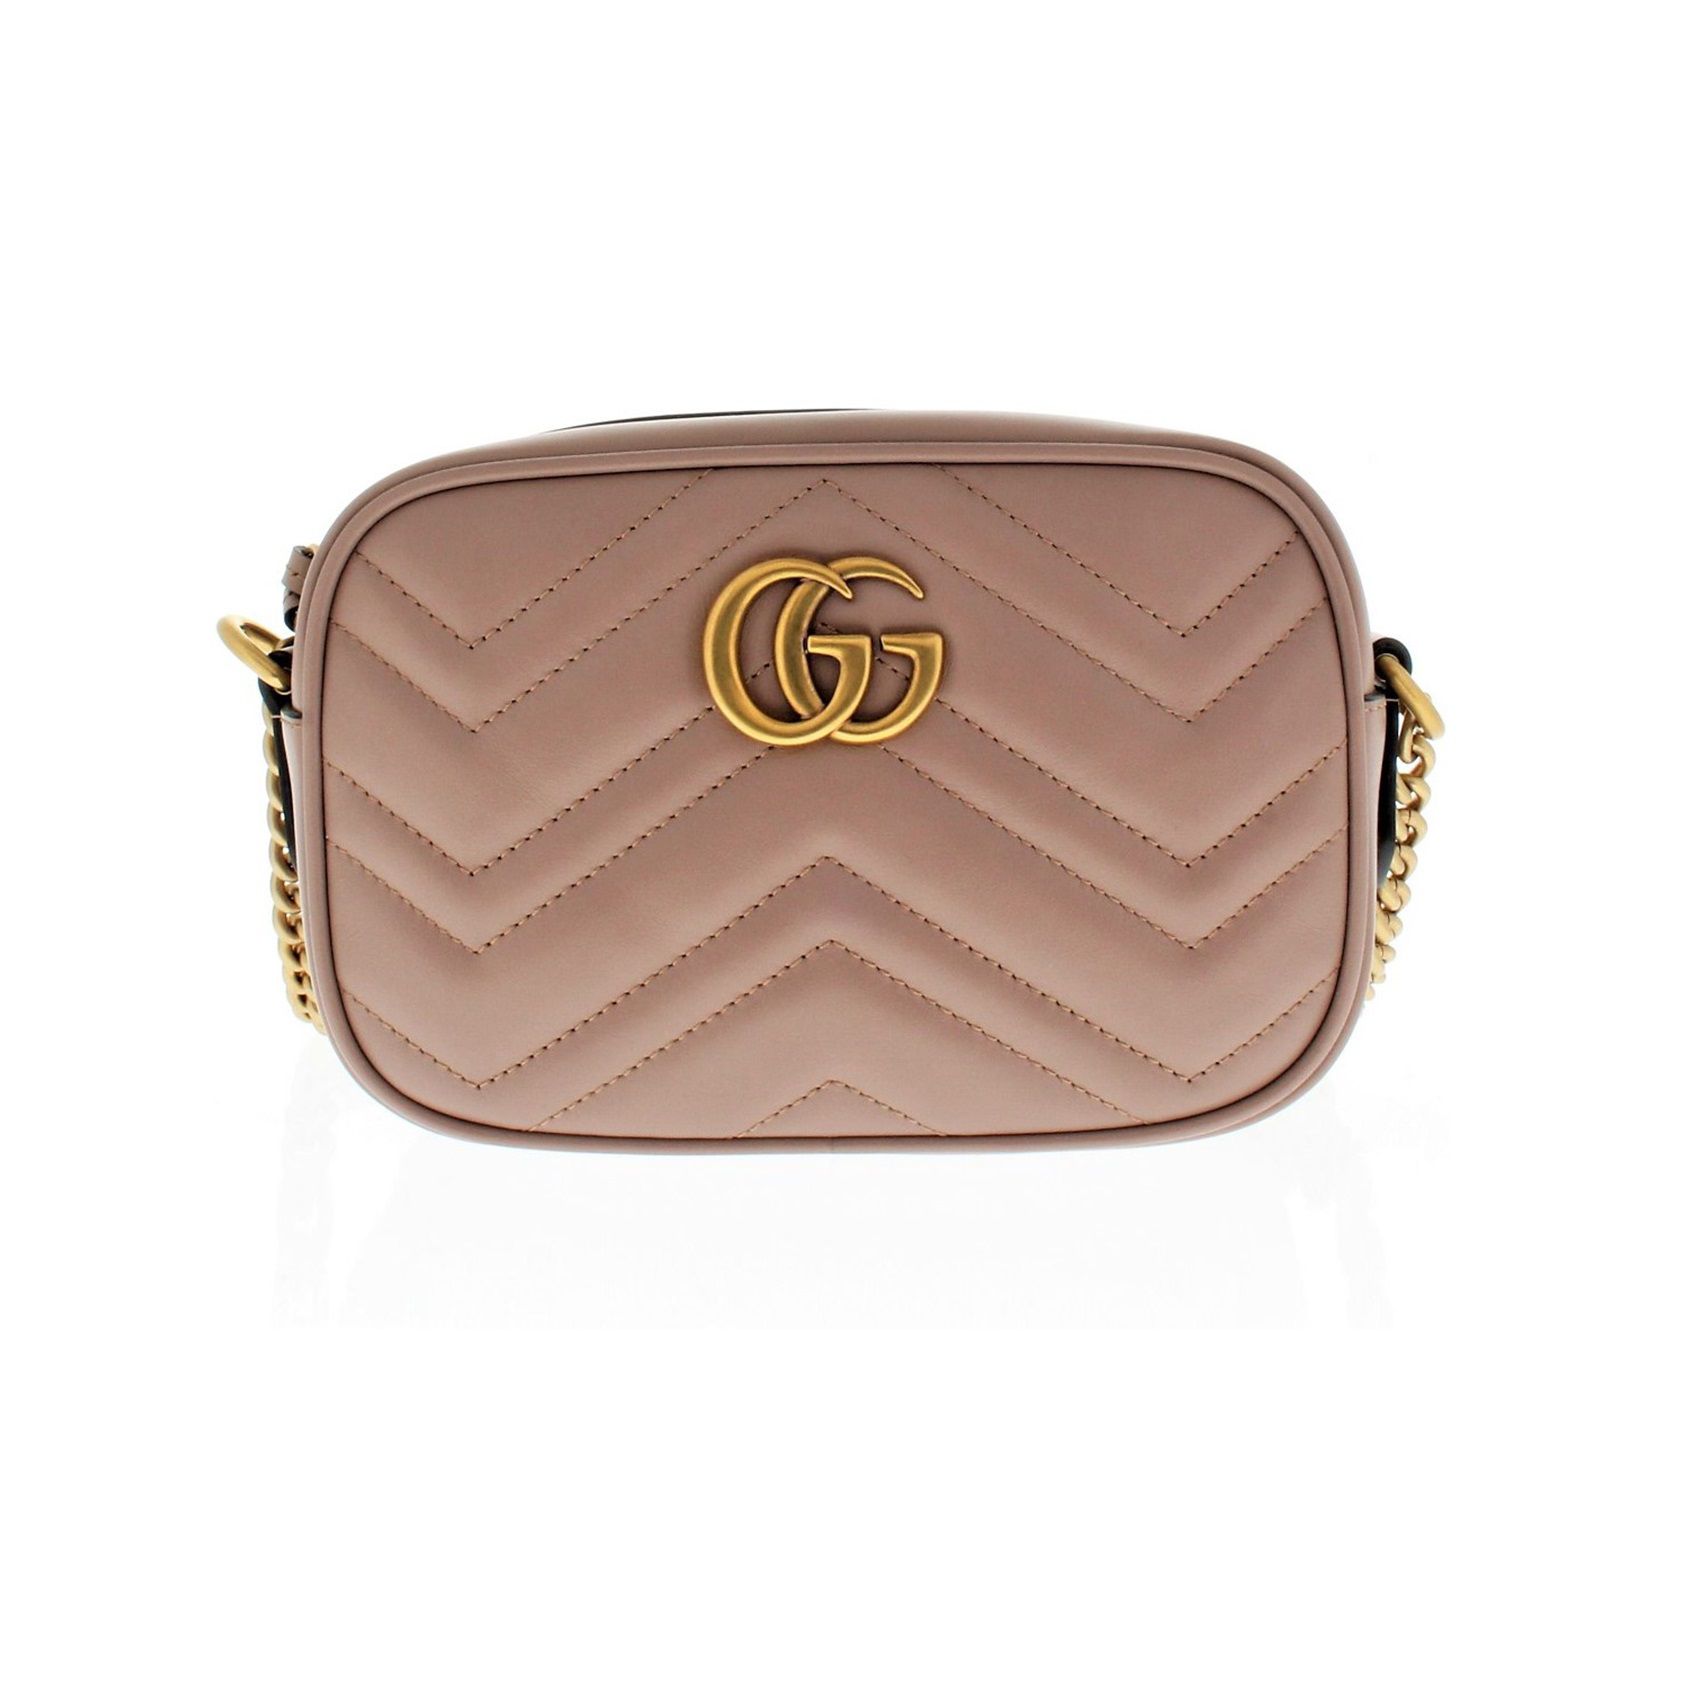 Bag Review: Gucci Marmont Mini Camera Bag - Coffee and Handbags